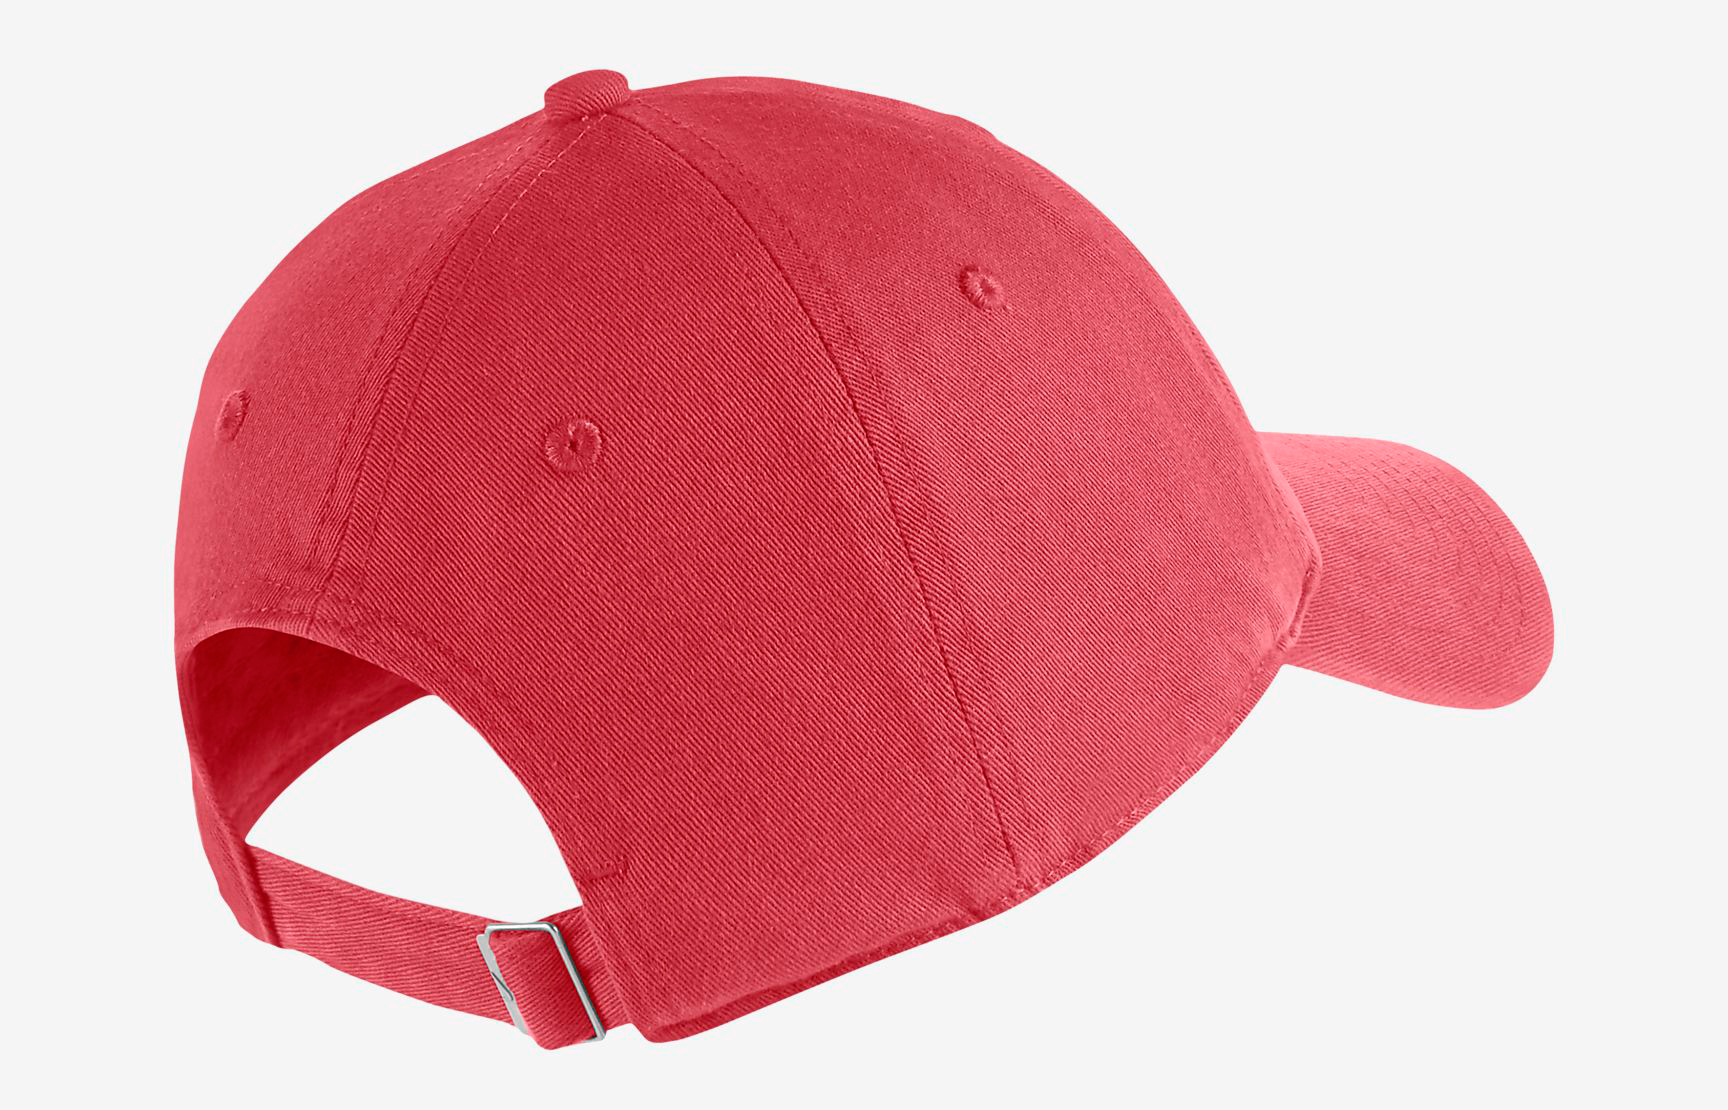 nike watermelon south beach hat match red 2